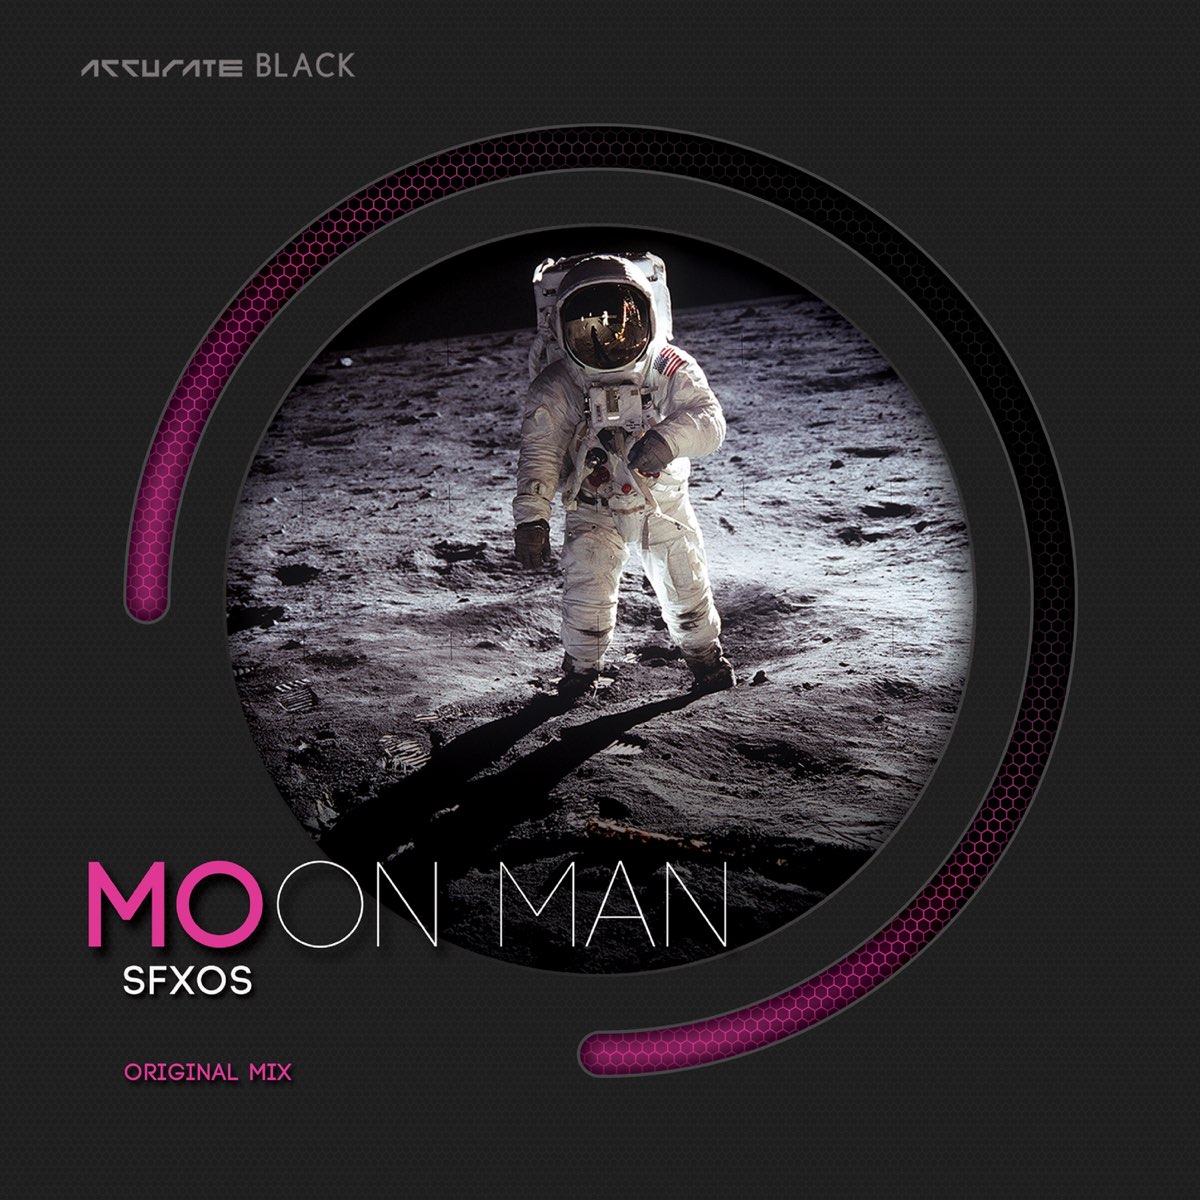 Man on moon extended mix. The Moon man. Moon man Productions. Man on the Moon (Radio Edit) кто. Moon man books China.